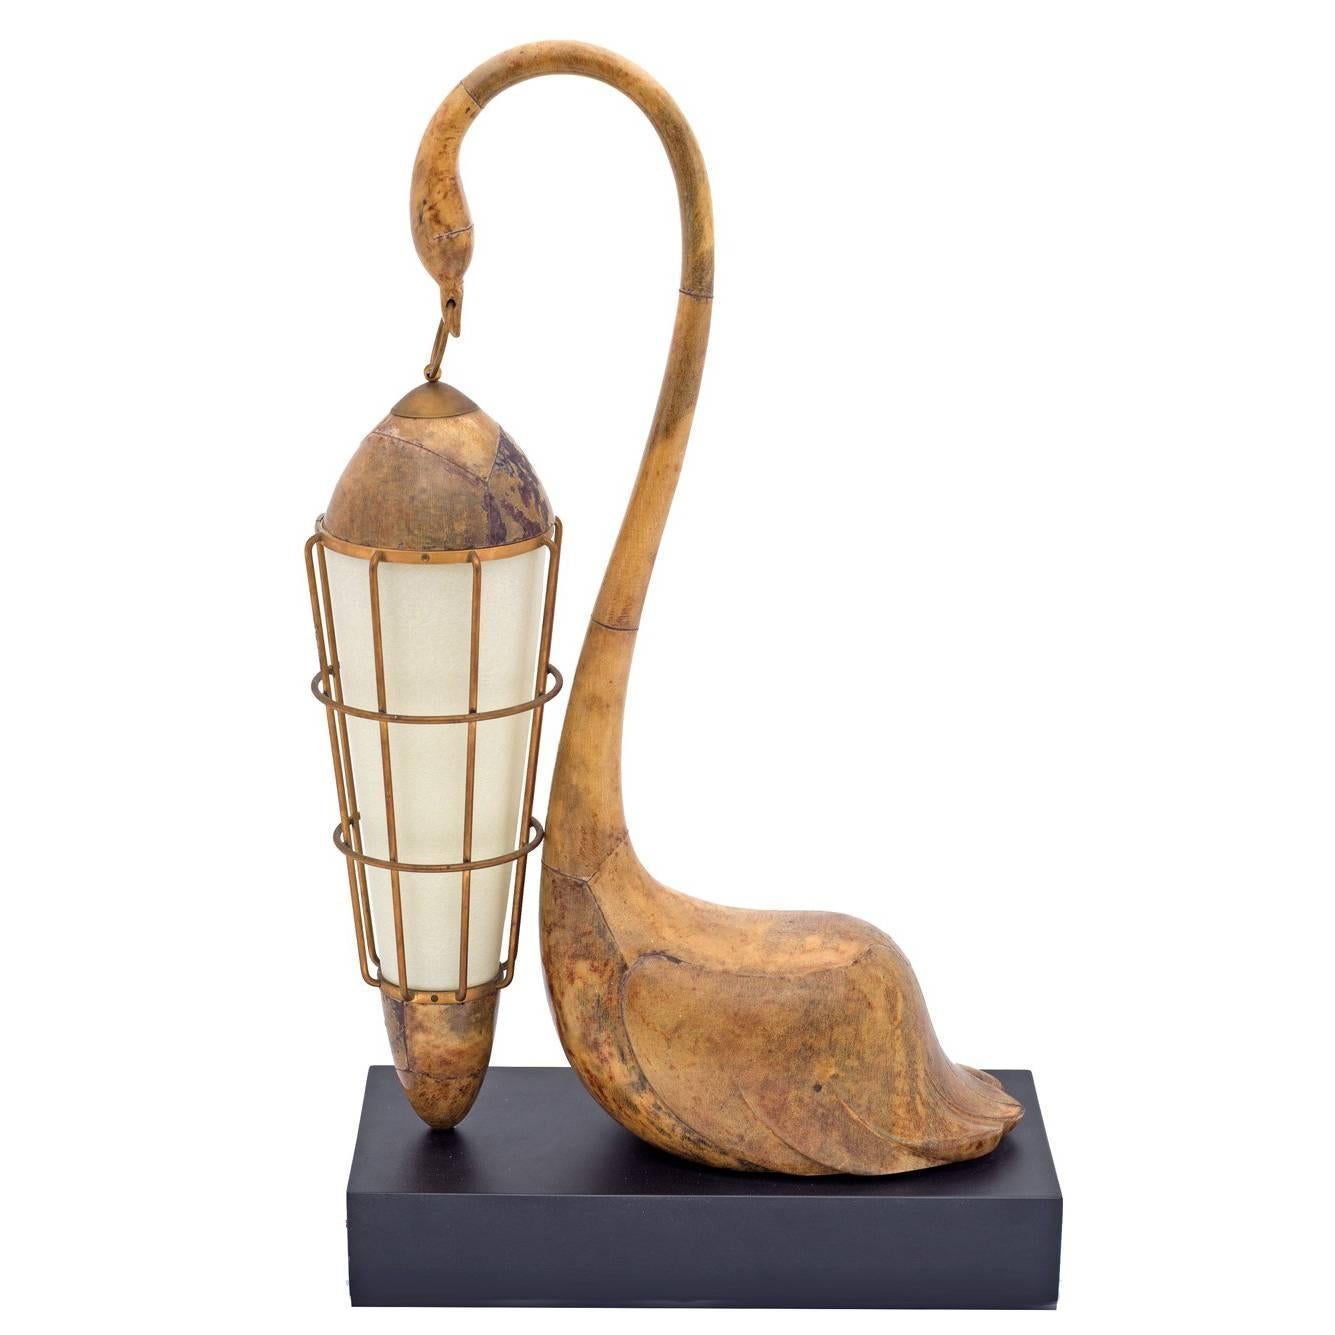 Aldo Tura Goatskin Swan Table Lamp, Italy, 1950s